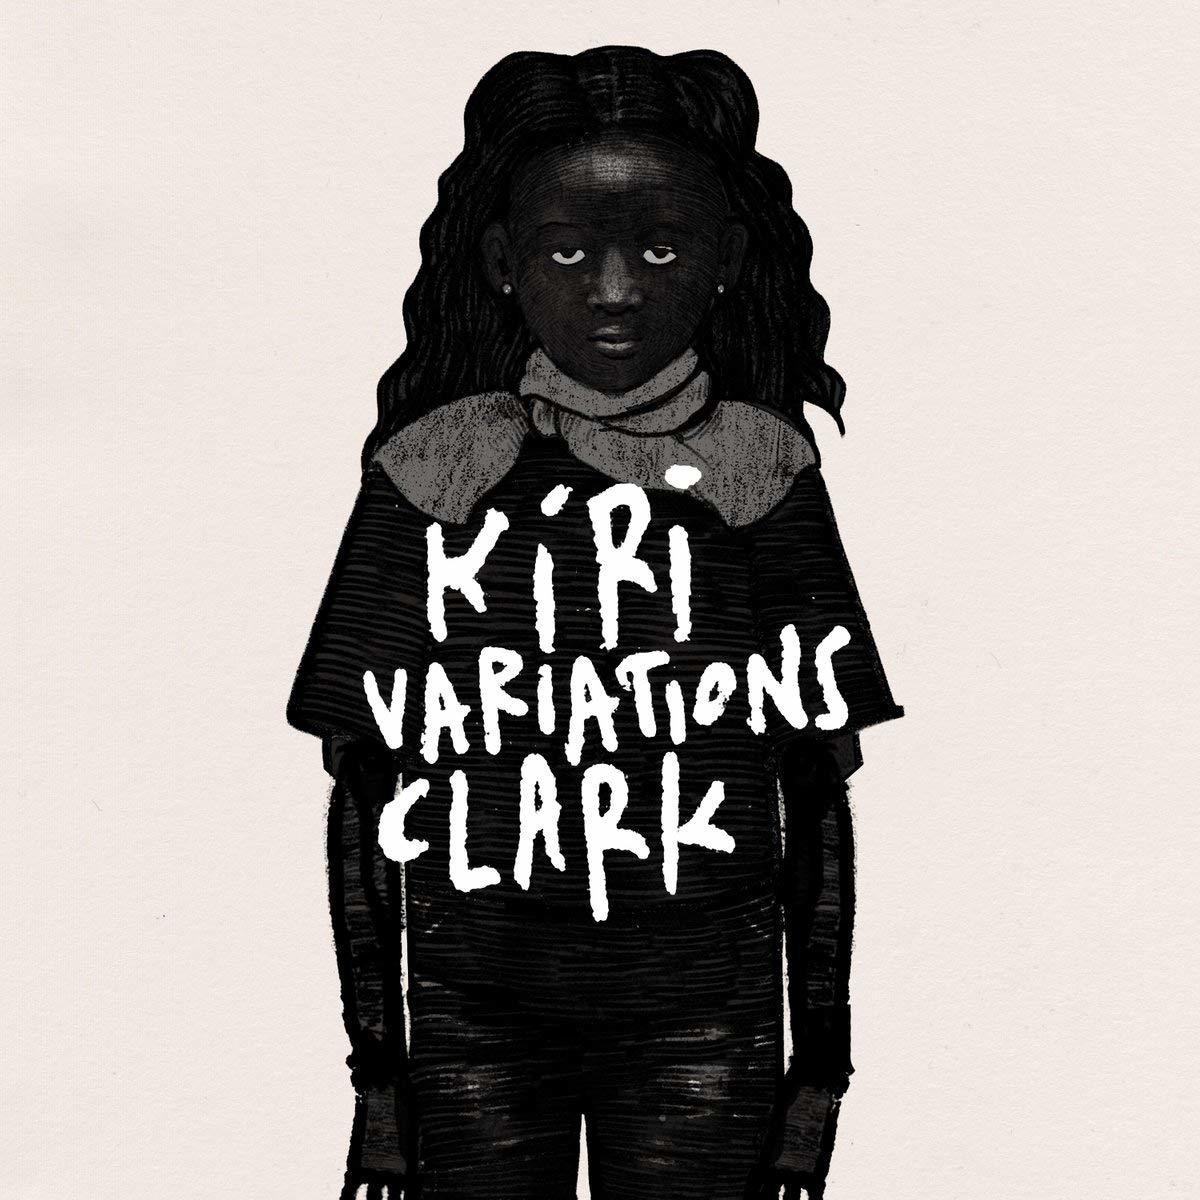 (Vinyl) - Kiri Clark Variations -